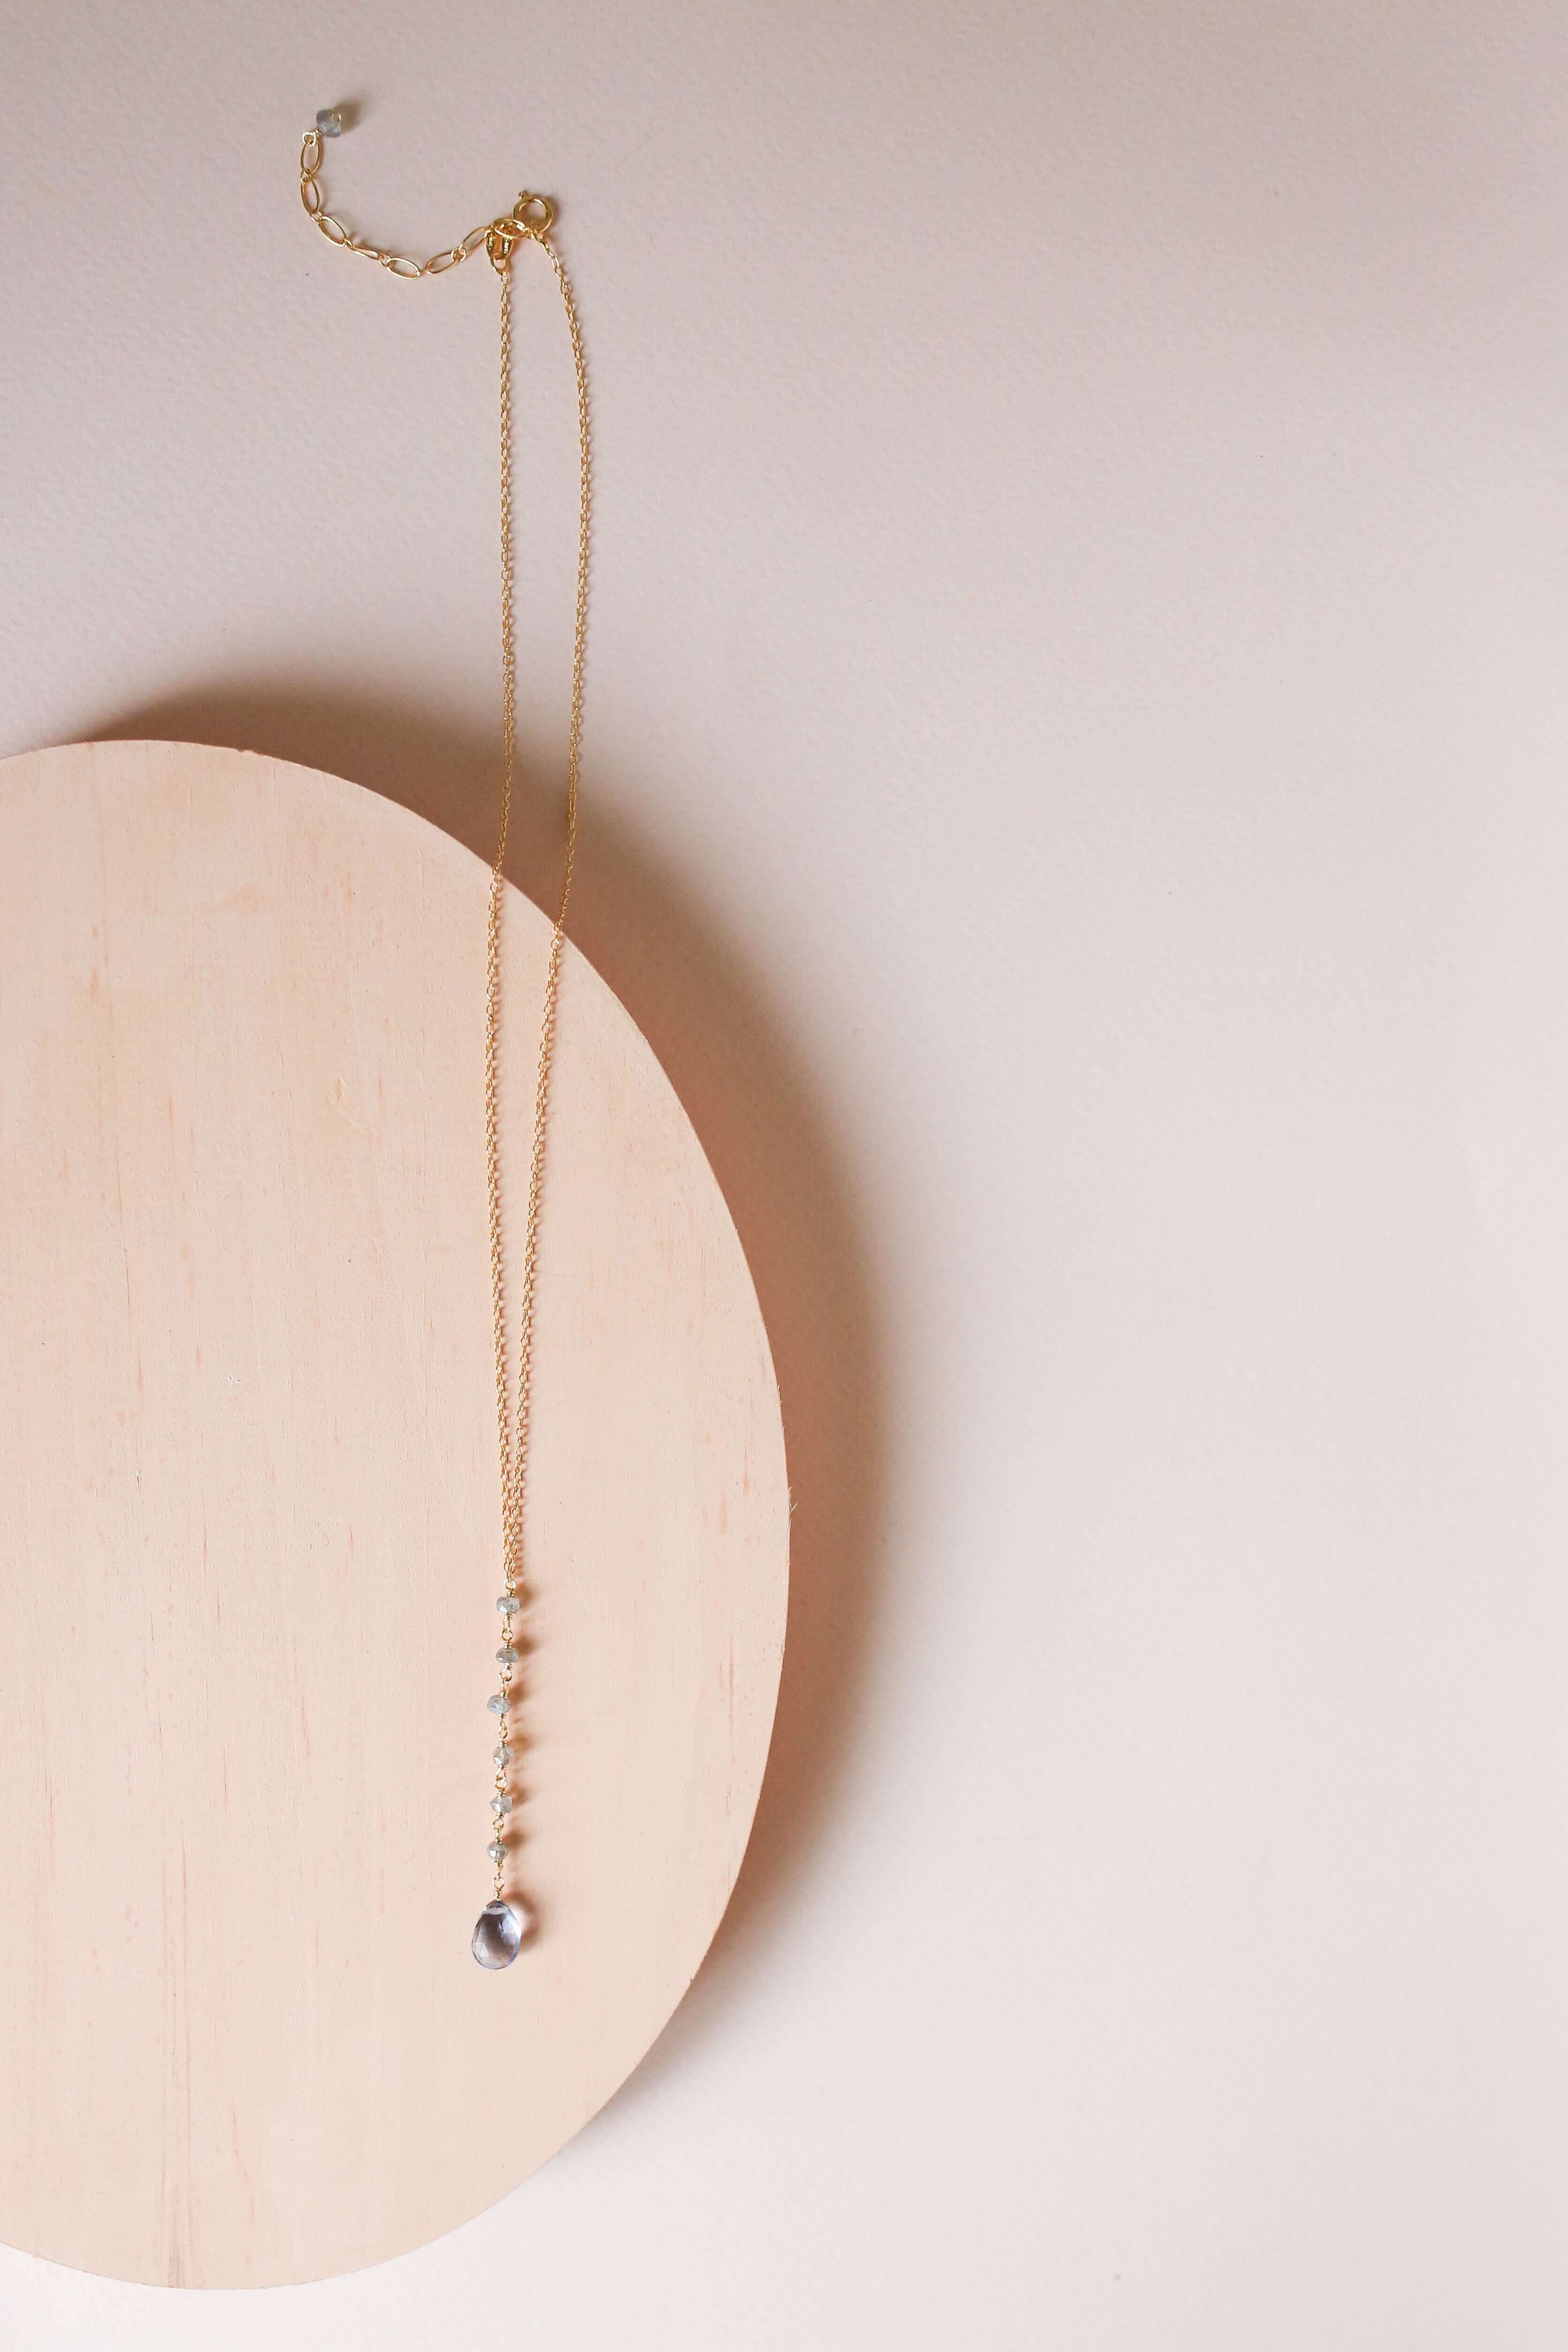 Tanzanite quartz gemstone Yoga Pendant  partnered with labradorite accent stones Gold Necklace 